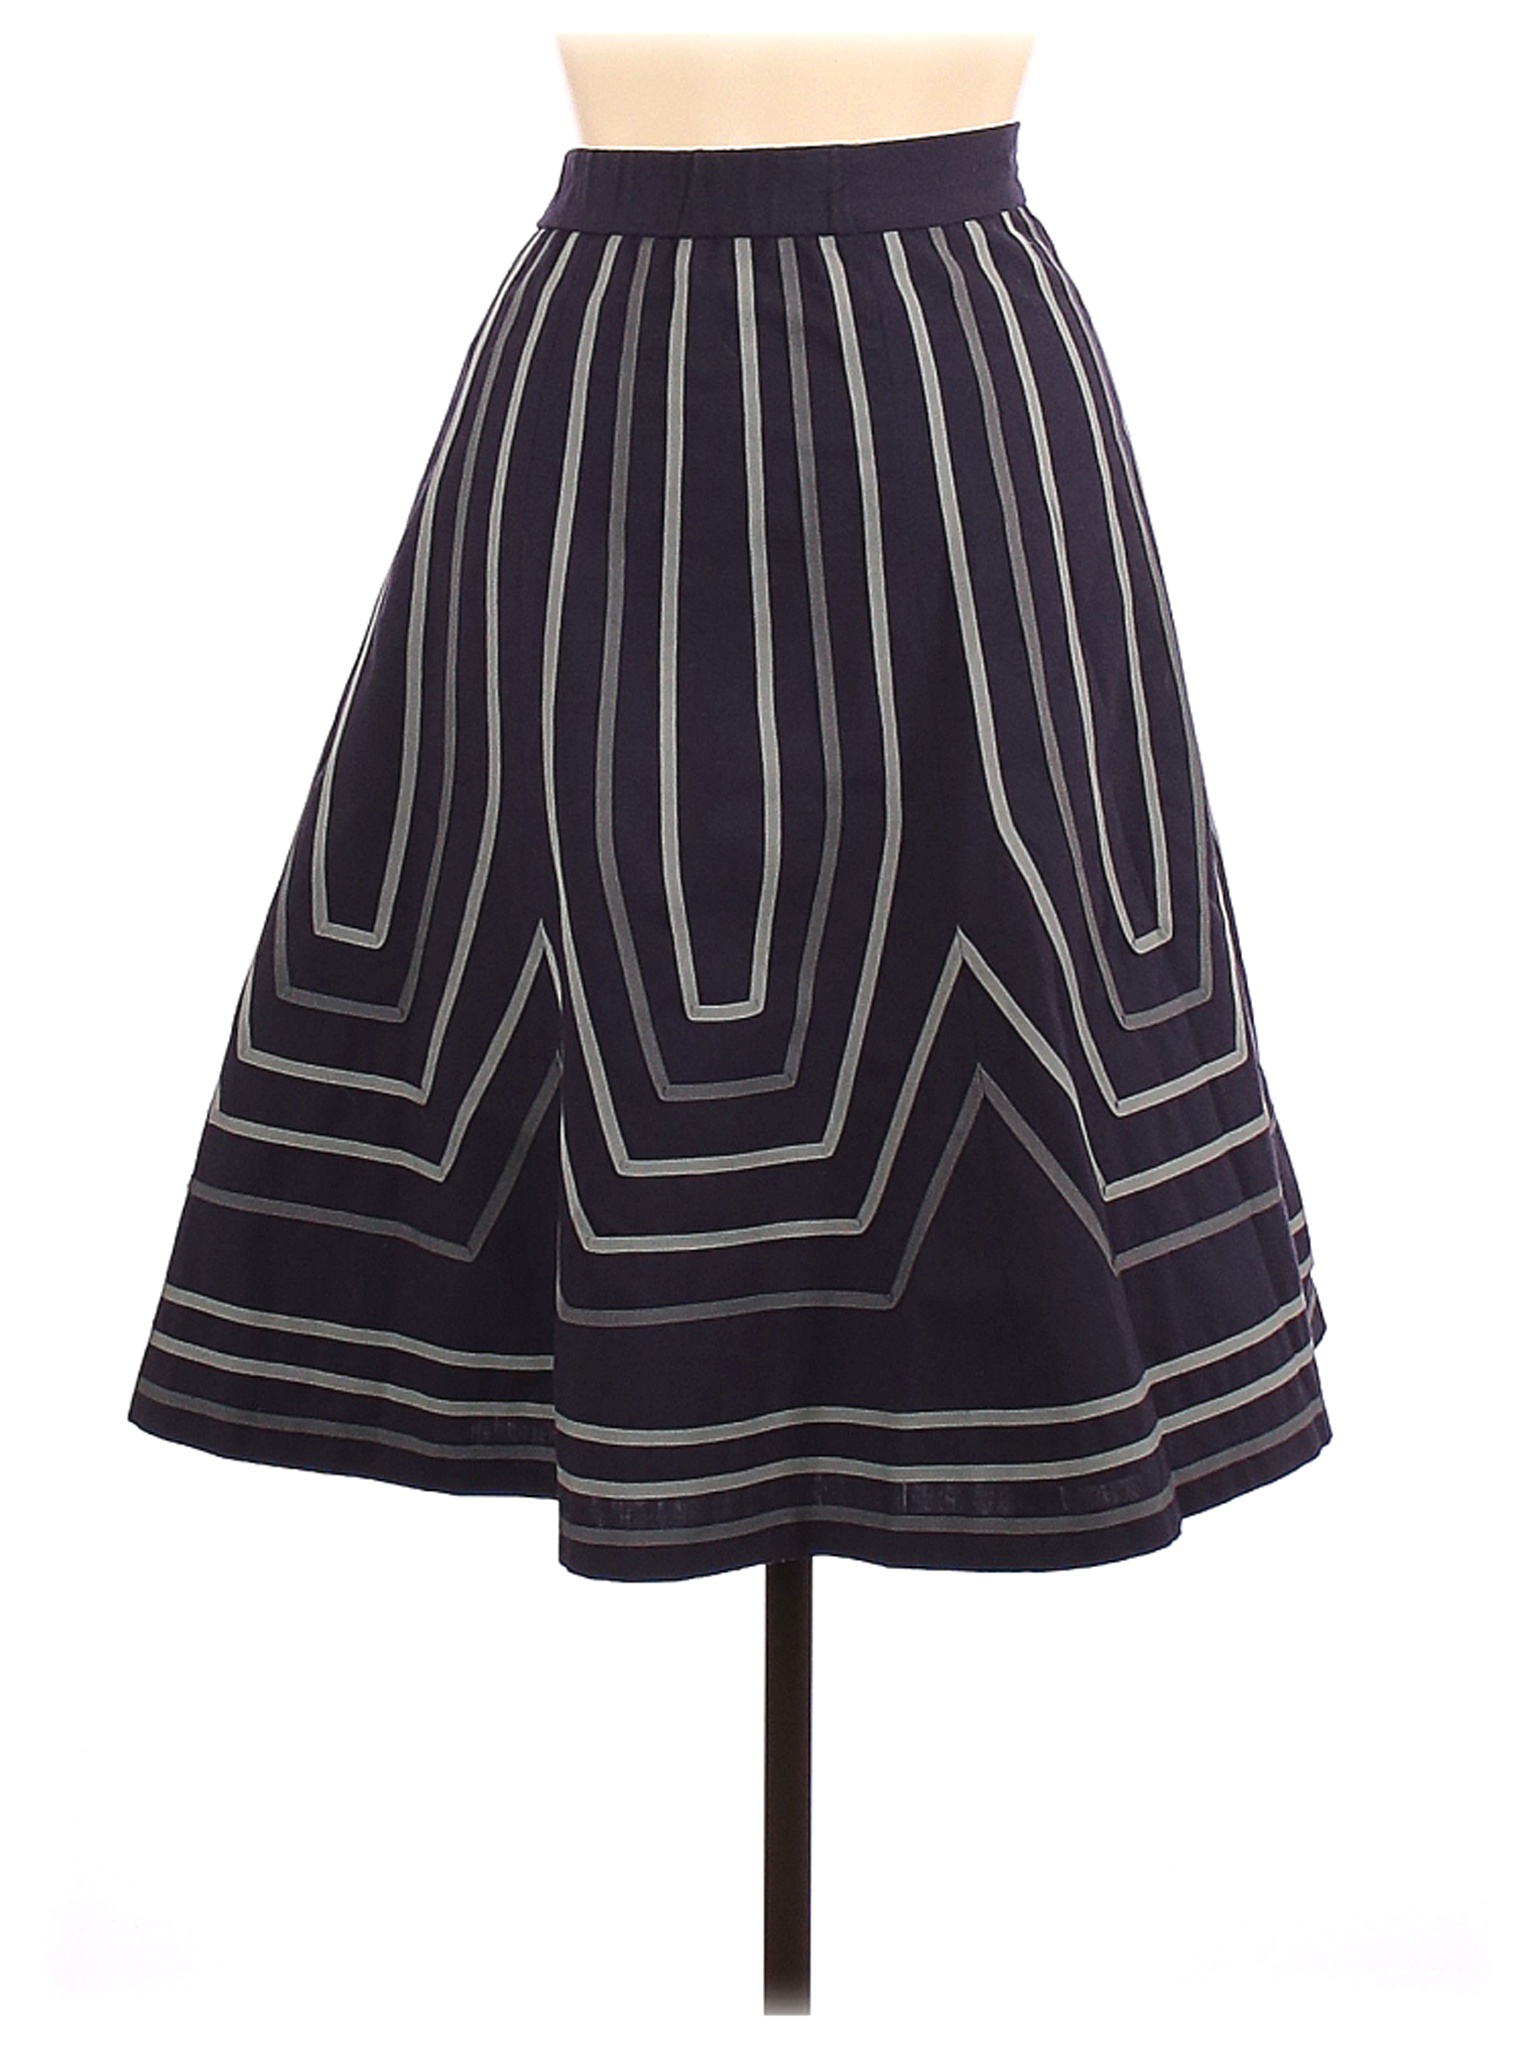 Soft Surroundings Women Black Casual Skirt M Petites | eBay